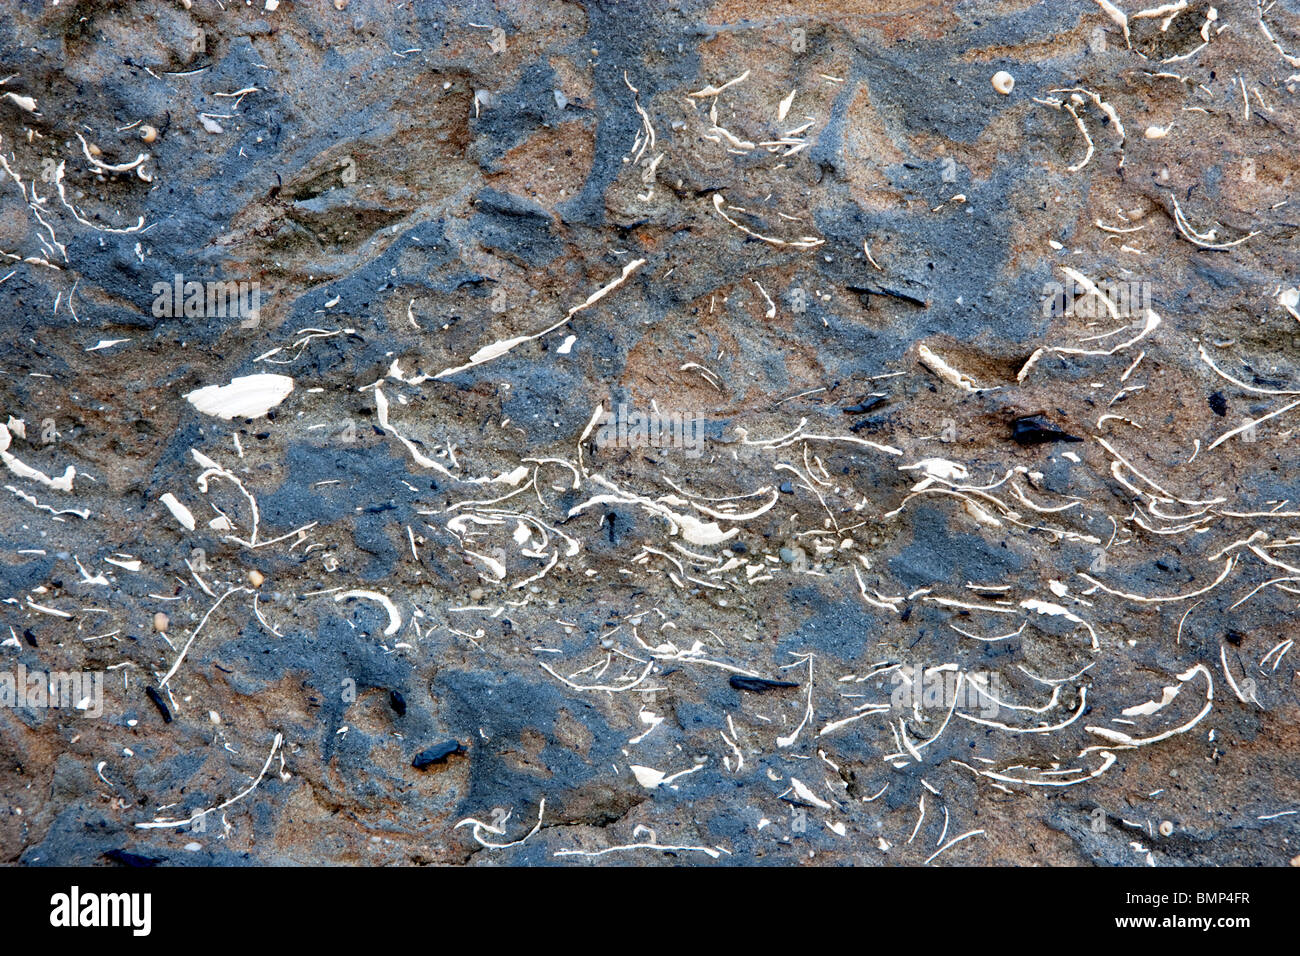 Sea shells, fossil rich layers in sedimentary rock, Stock Photo